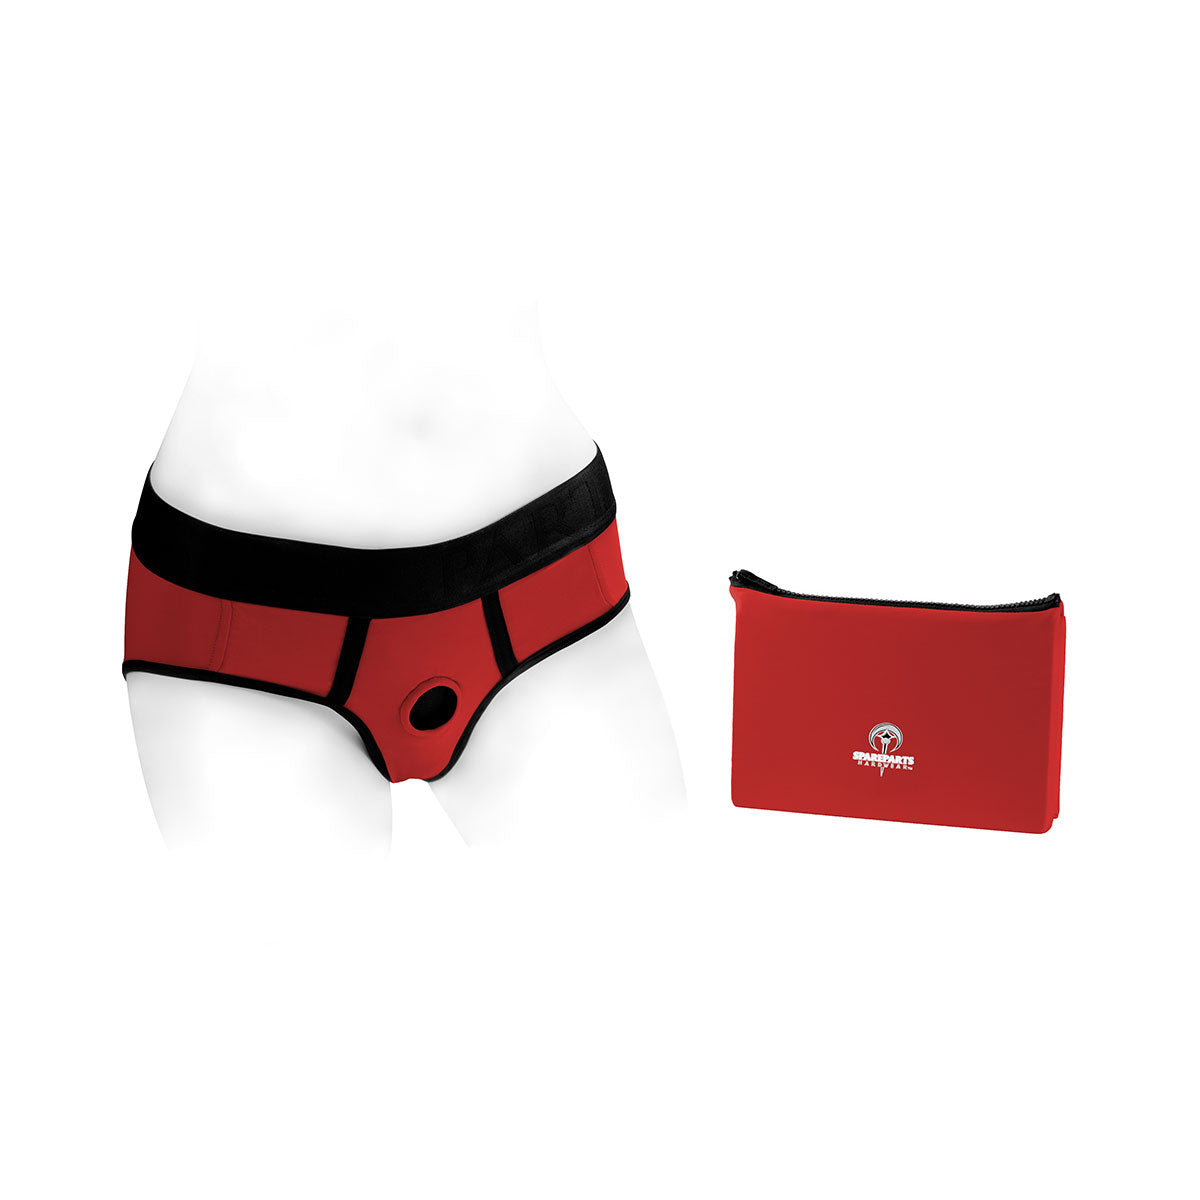 SpareParts Tomboi Harness Red/Black Nylon - Medium